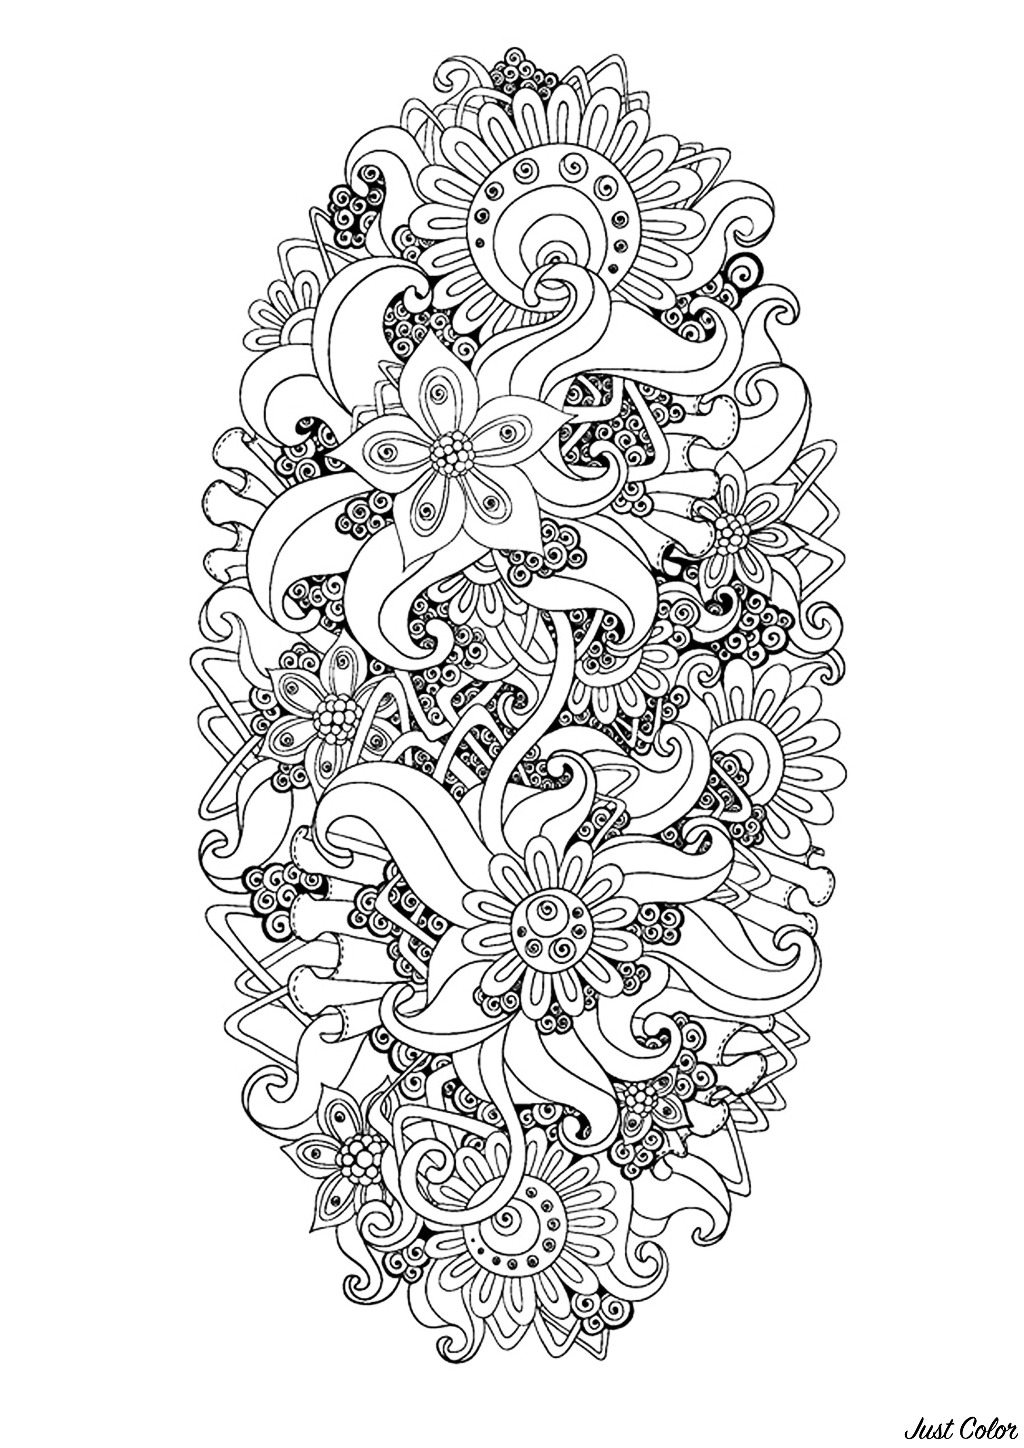 Coloriage 100% Anti-stress : motifs abstraits d'inspiration florale : n°9